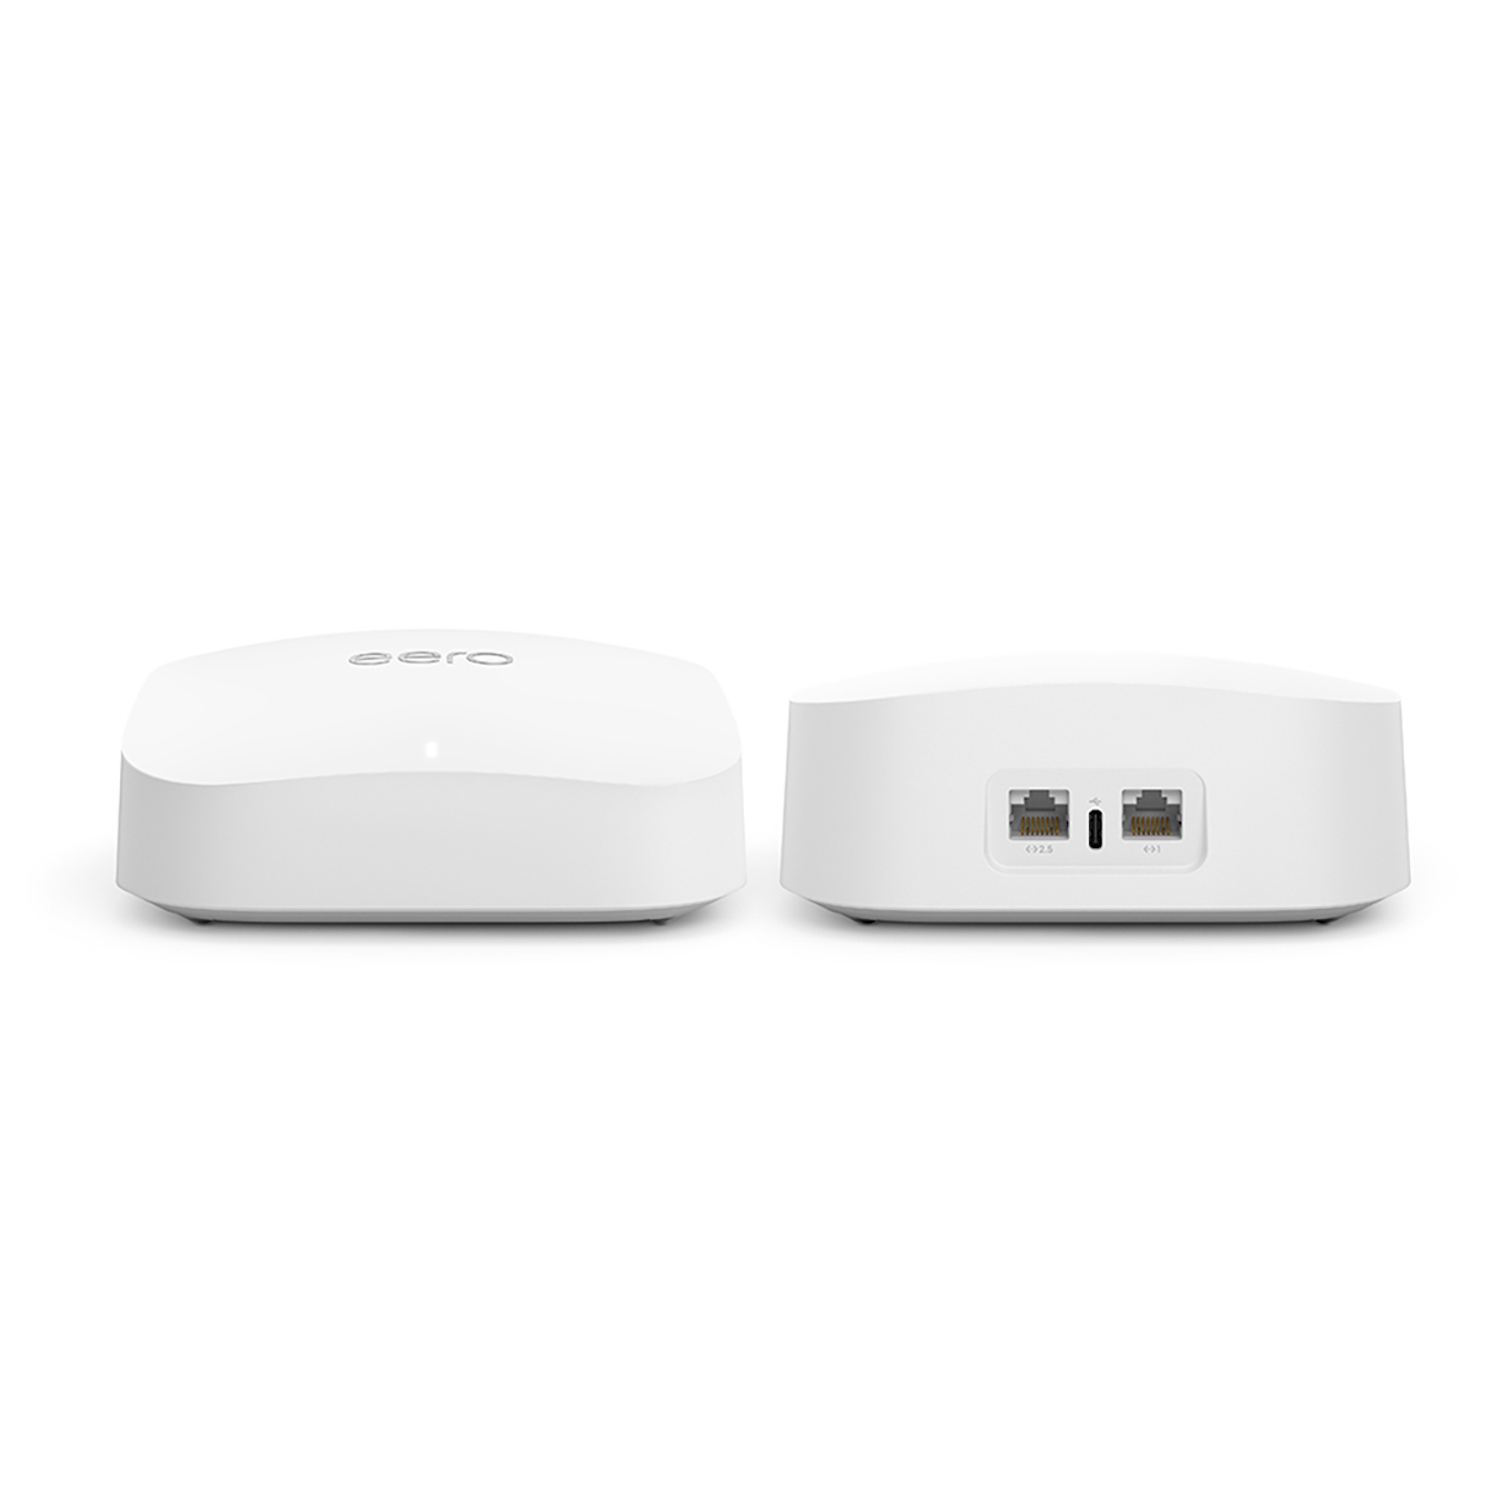 Angle View: eero - Pro 6E AXE5400 Tri-Band Mesh Wi-Fi 6E System (2-pack) - White